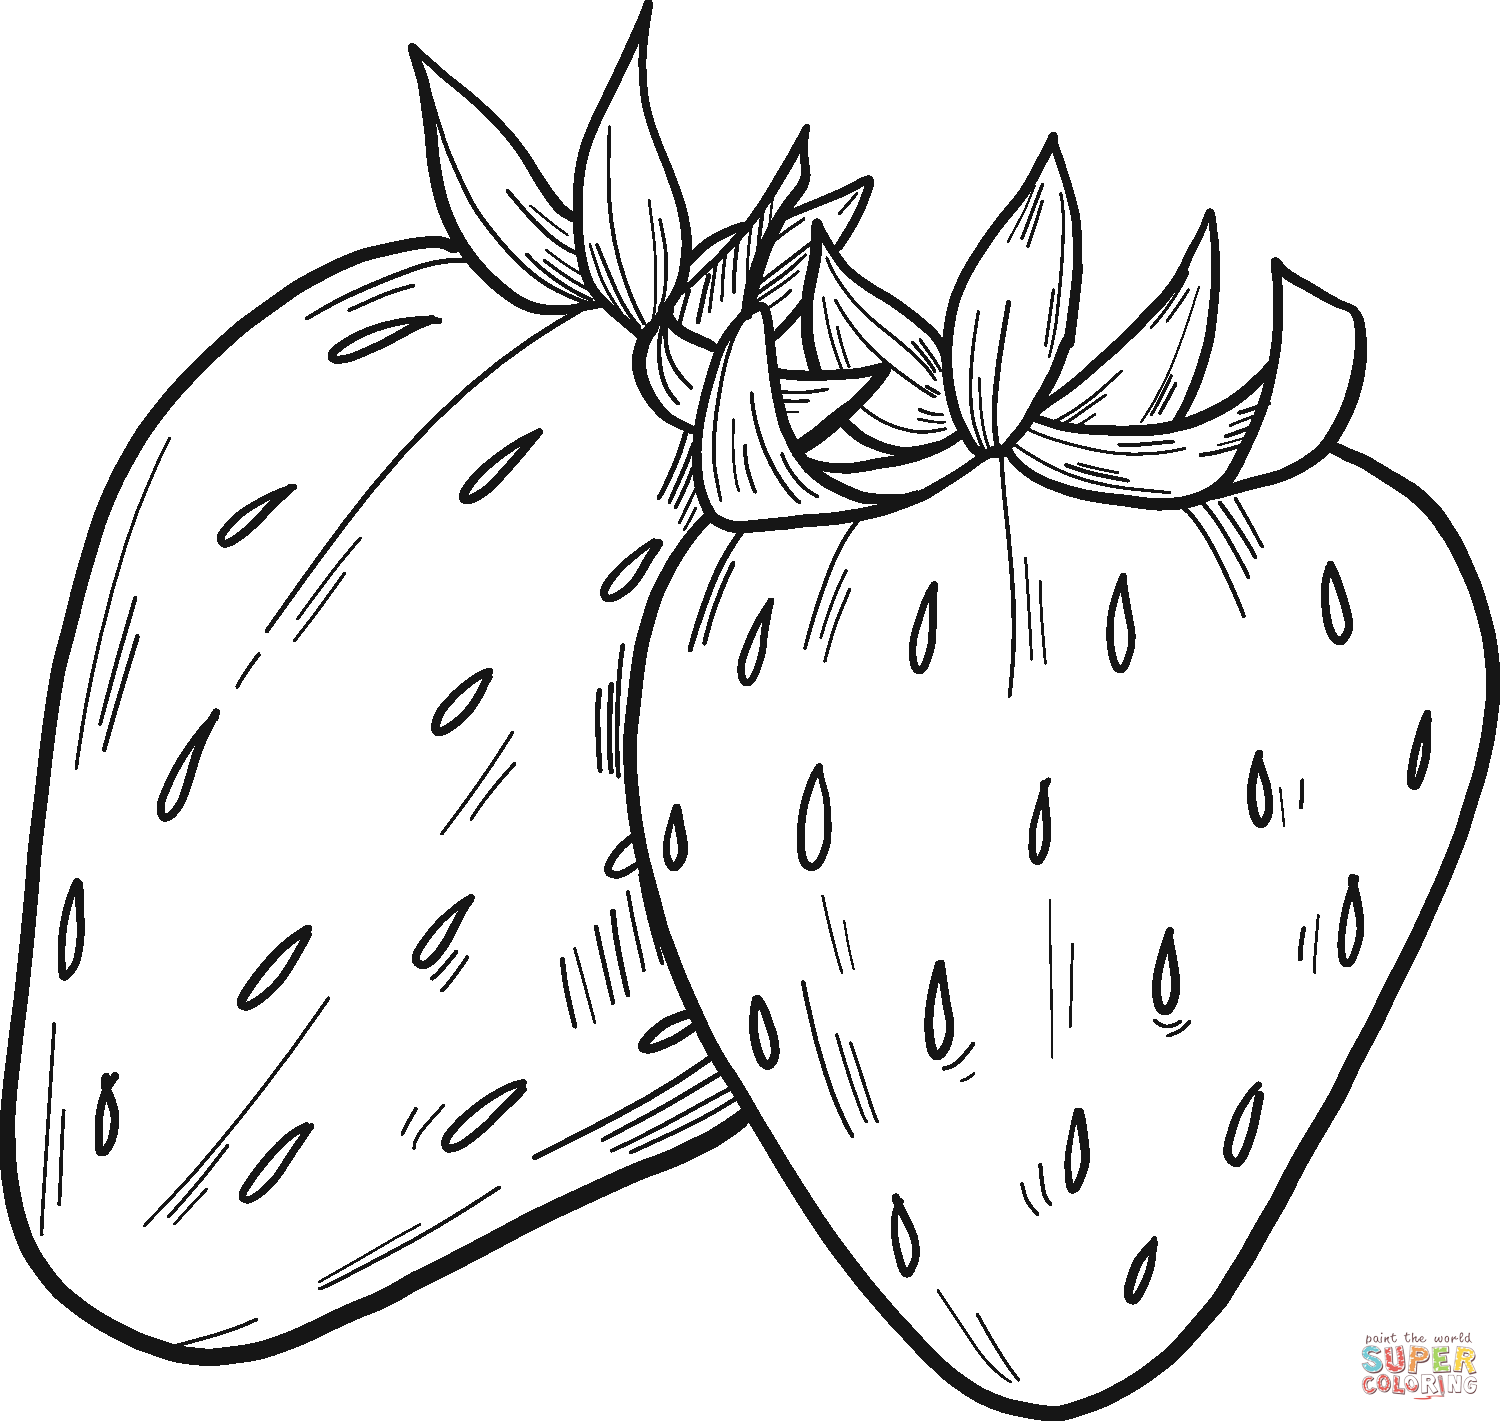 Dibujo de fresas para colorear dibujos para colorear imprimir gratis